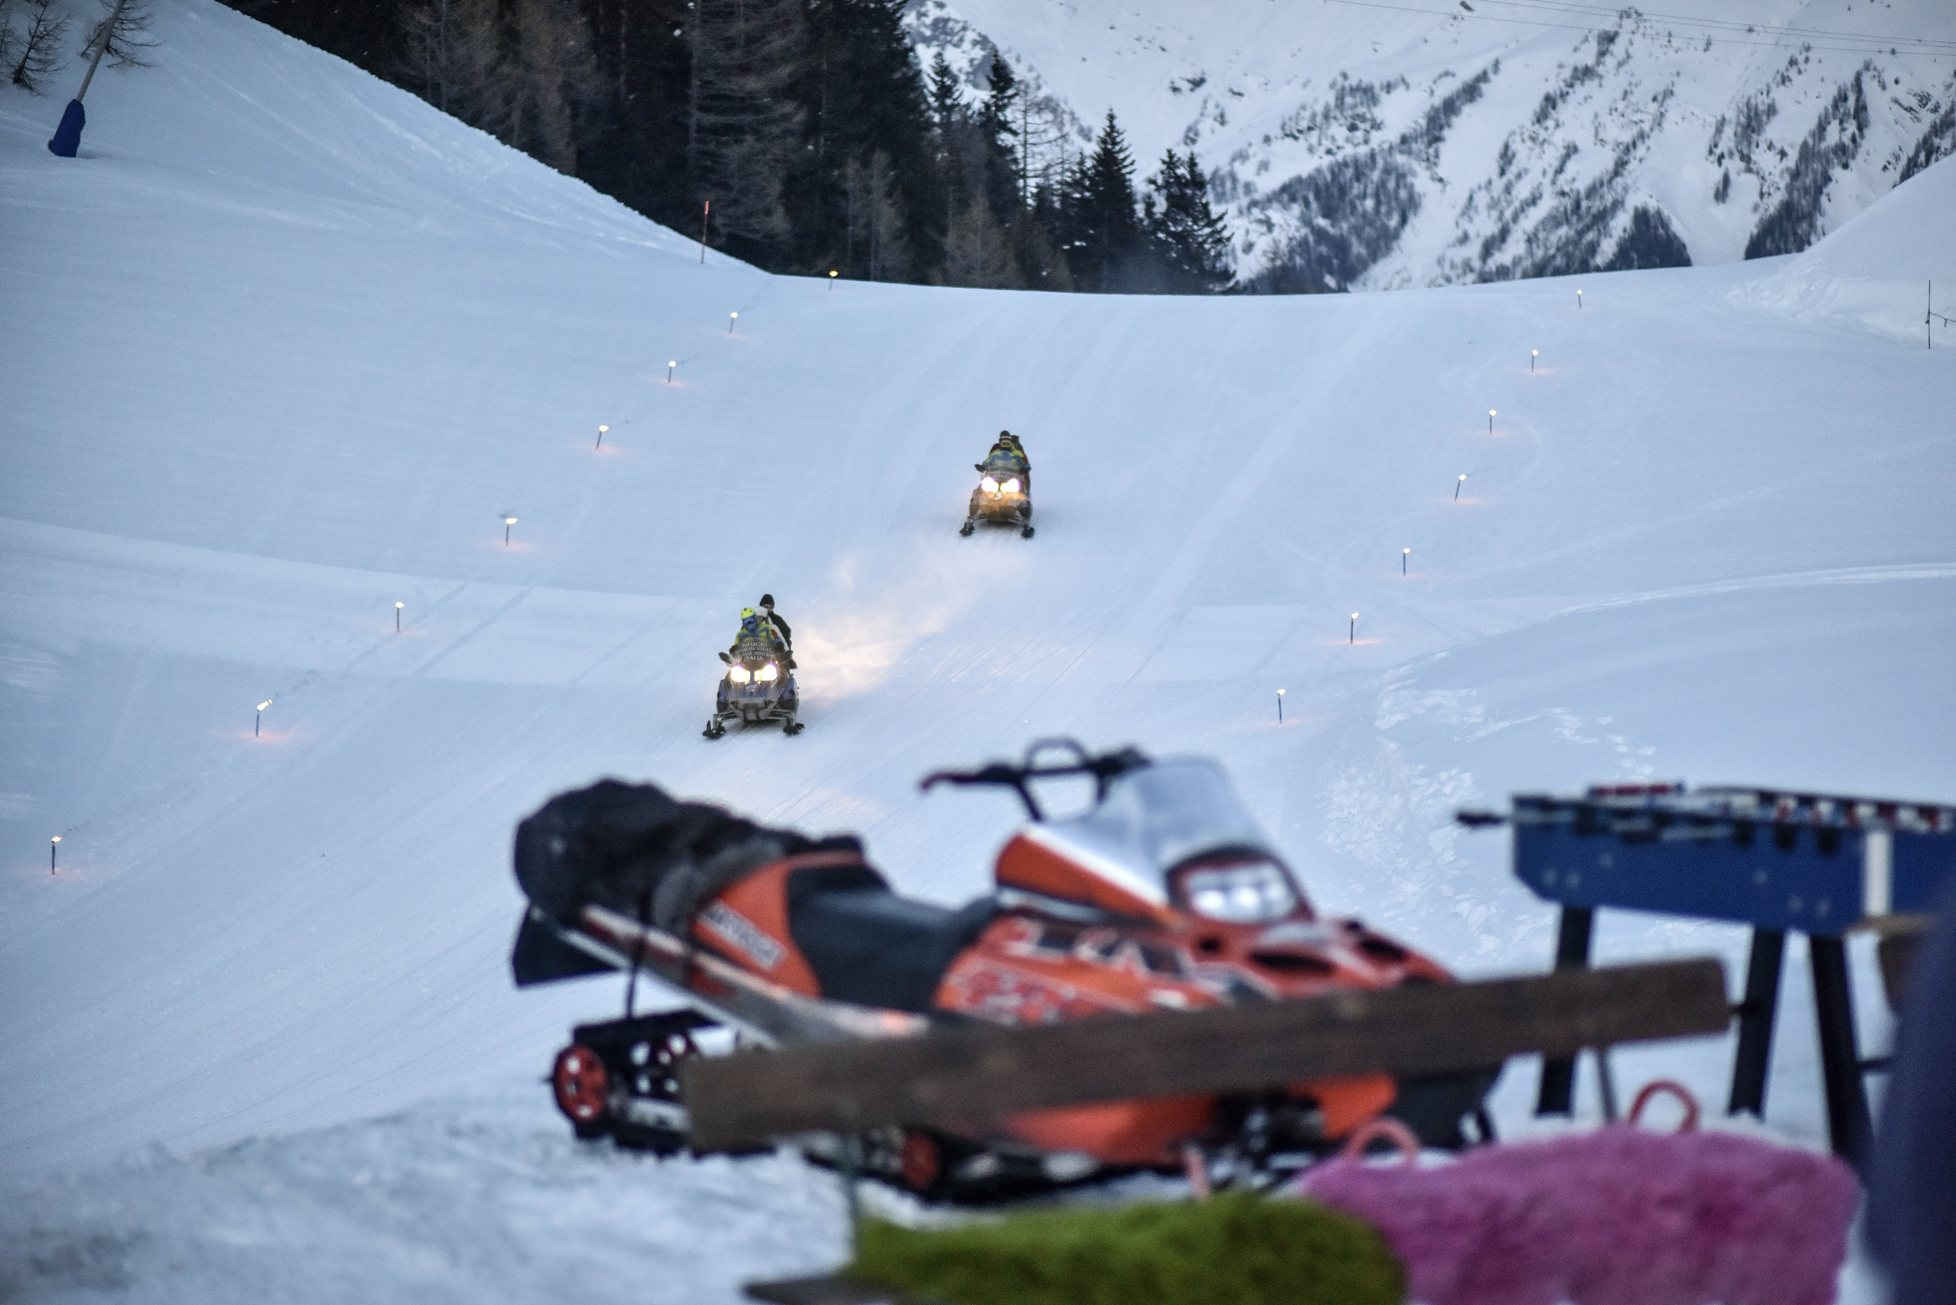 Mountain Gourmet Ski Experience Courmayeur Italy - 14 - 17 March 2019